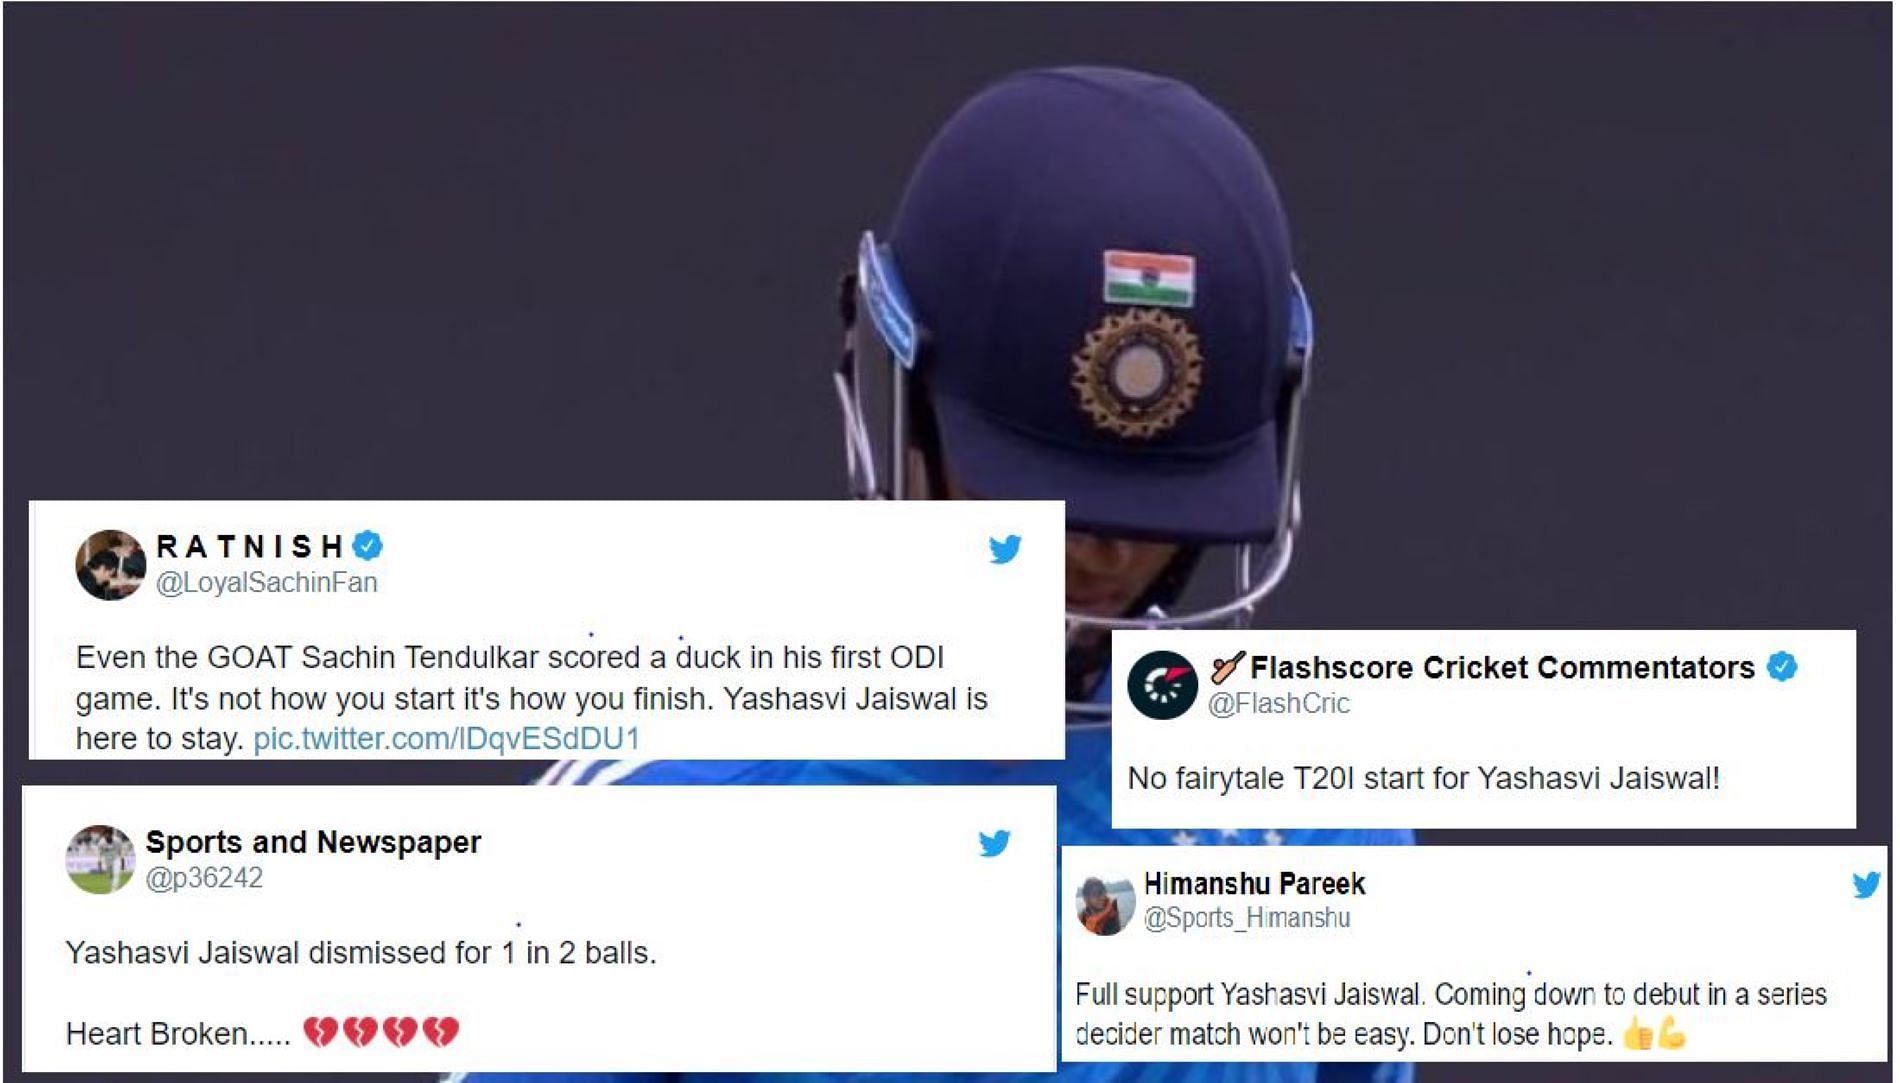 Even the GOAT Sachin Tendulkar scored a duck in his first ODI game/